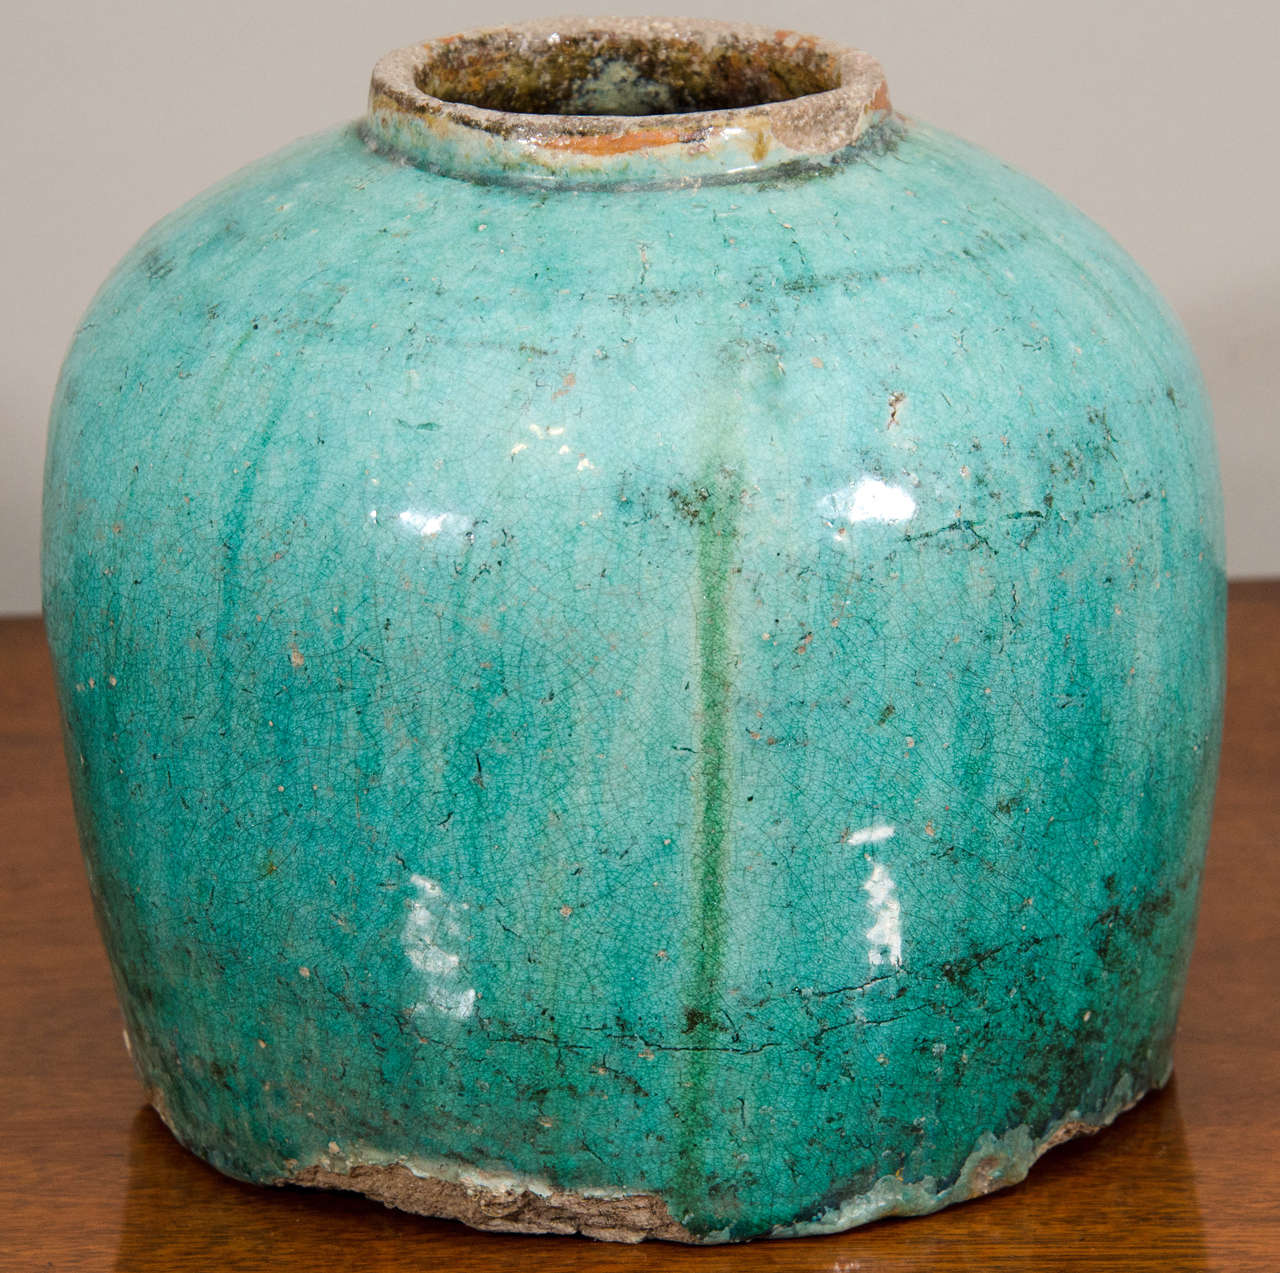 19th century earthenware jar.